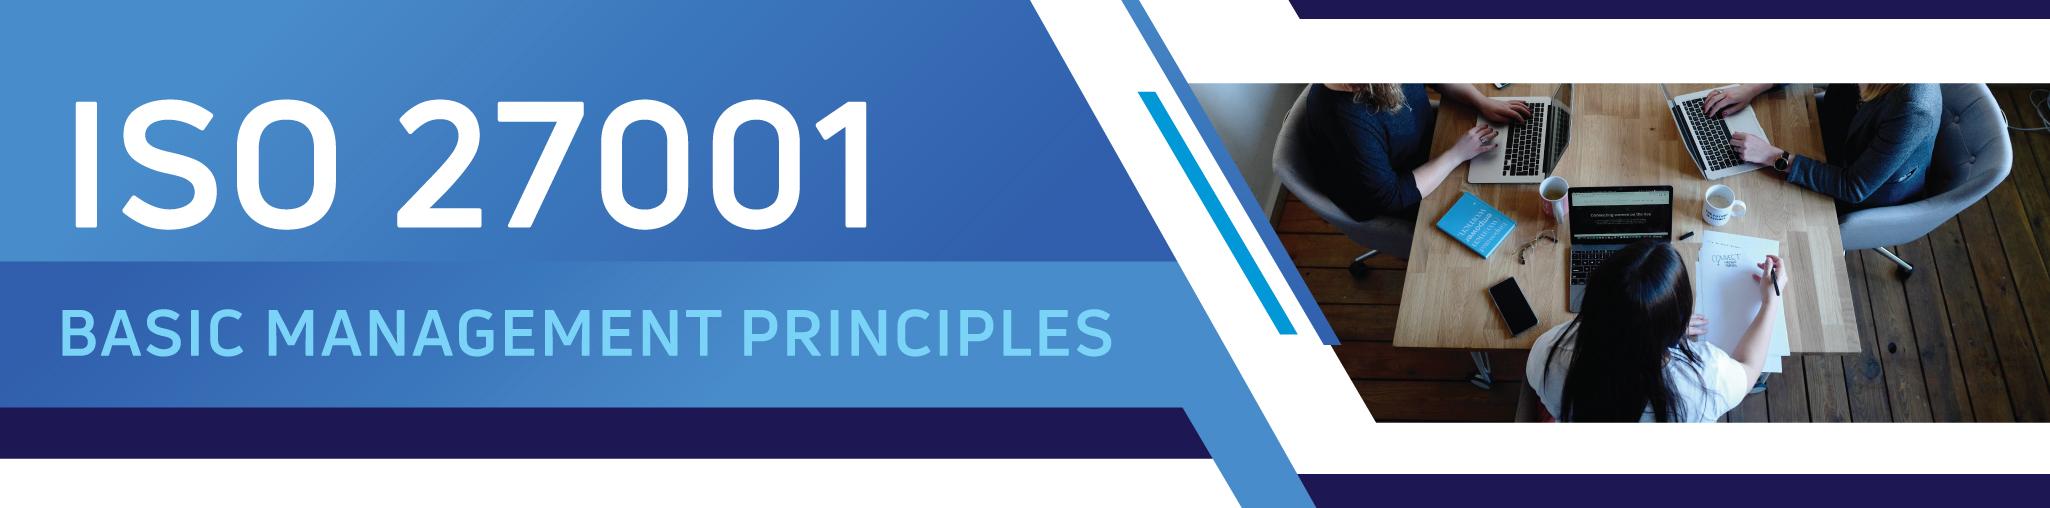 ISO 27001 Basic Management Principles